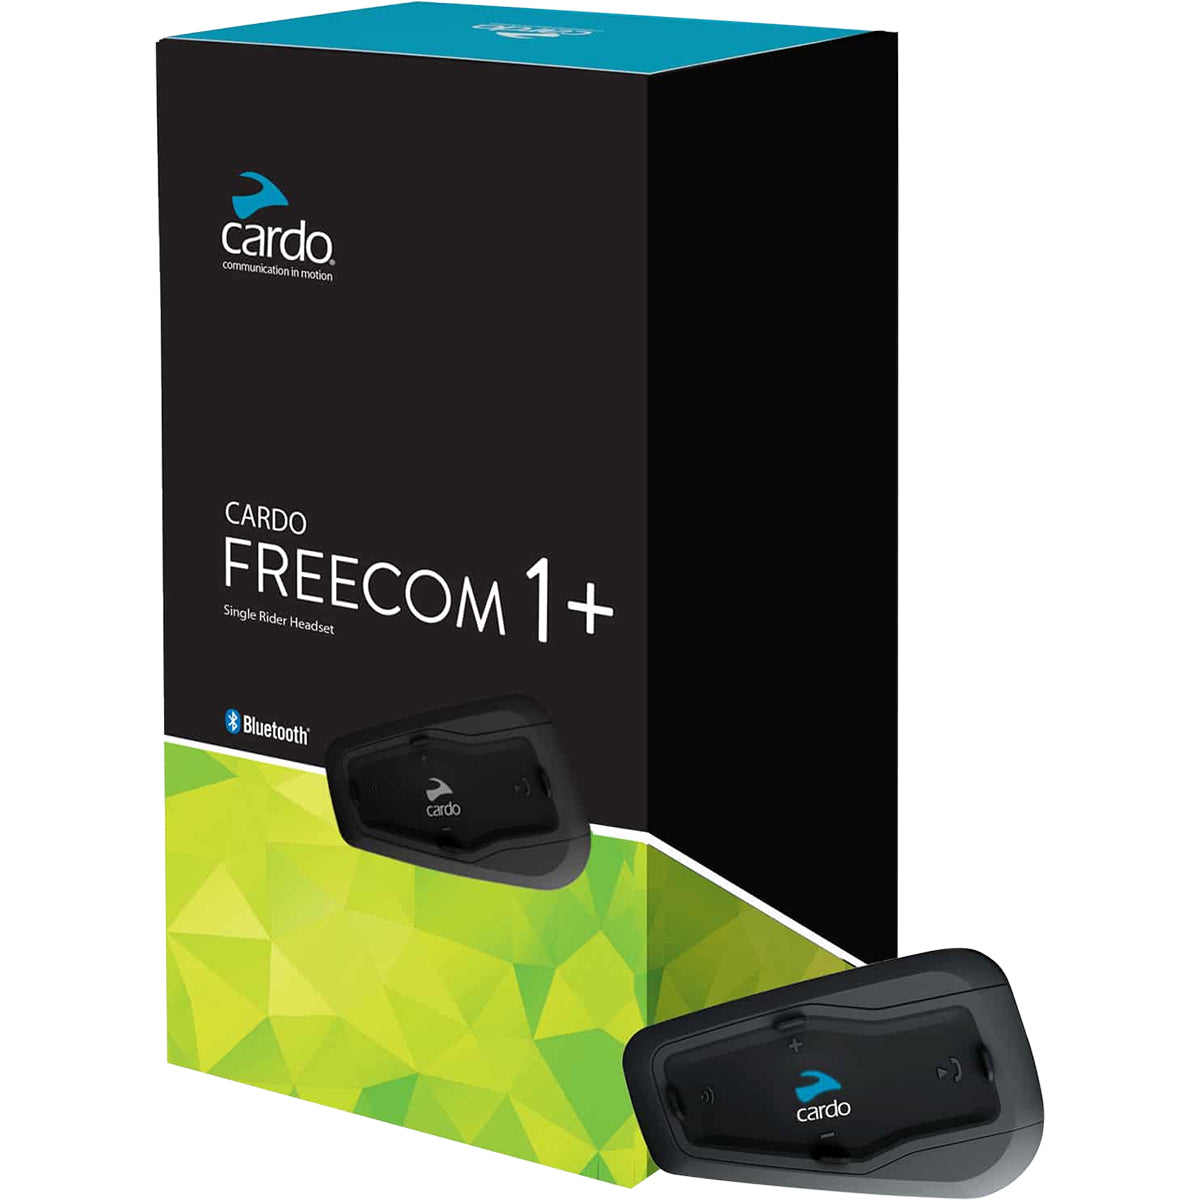 Cardo Freecom 1+ Series Autio and Micrphone Kit System Accessories-211929